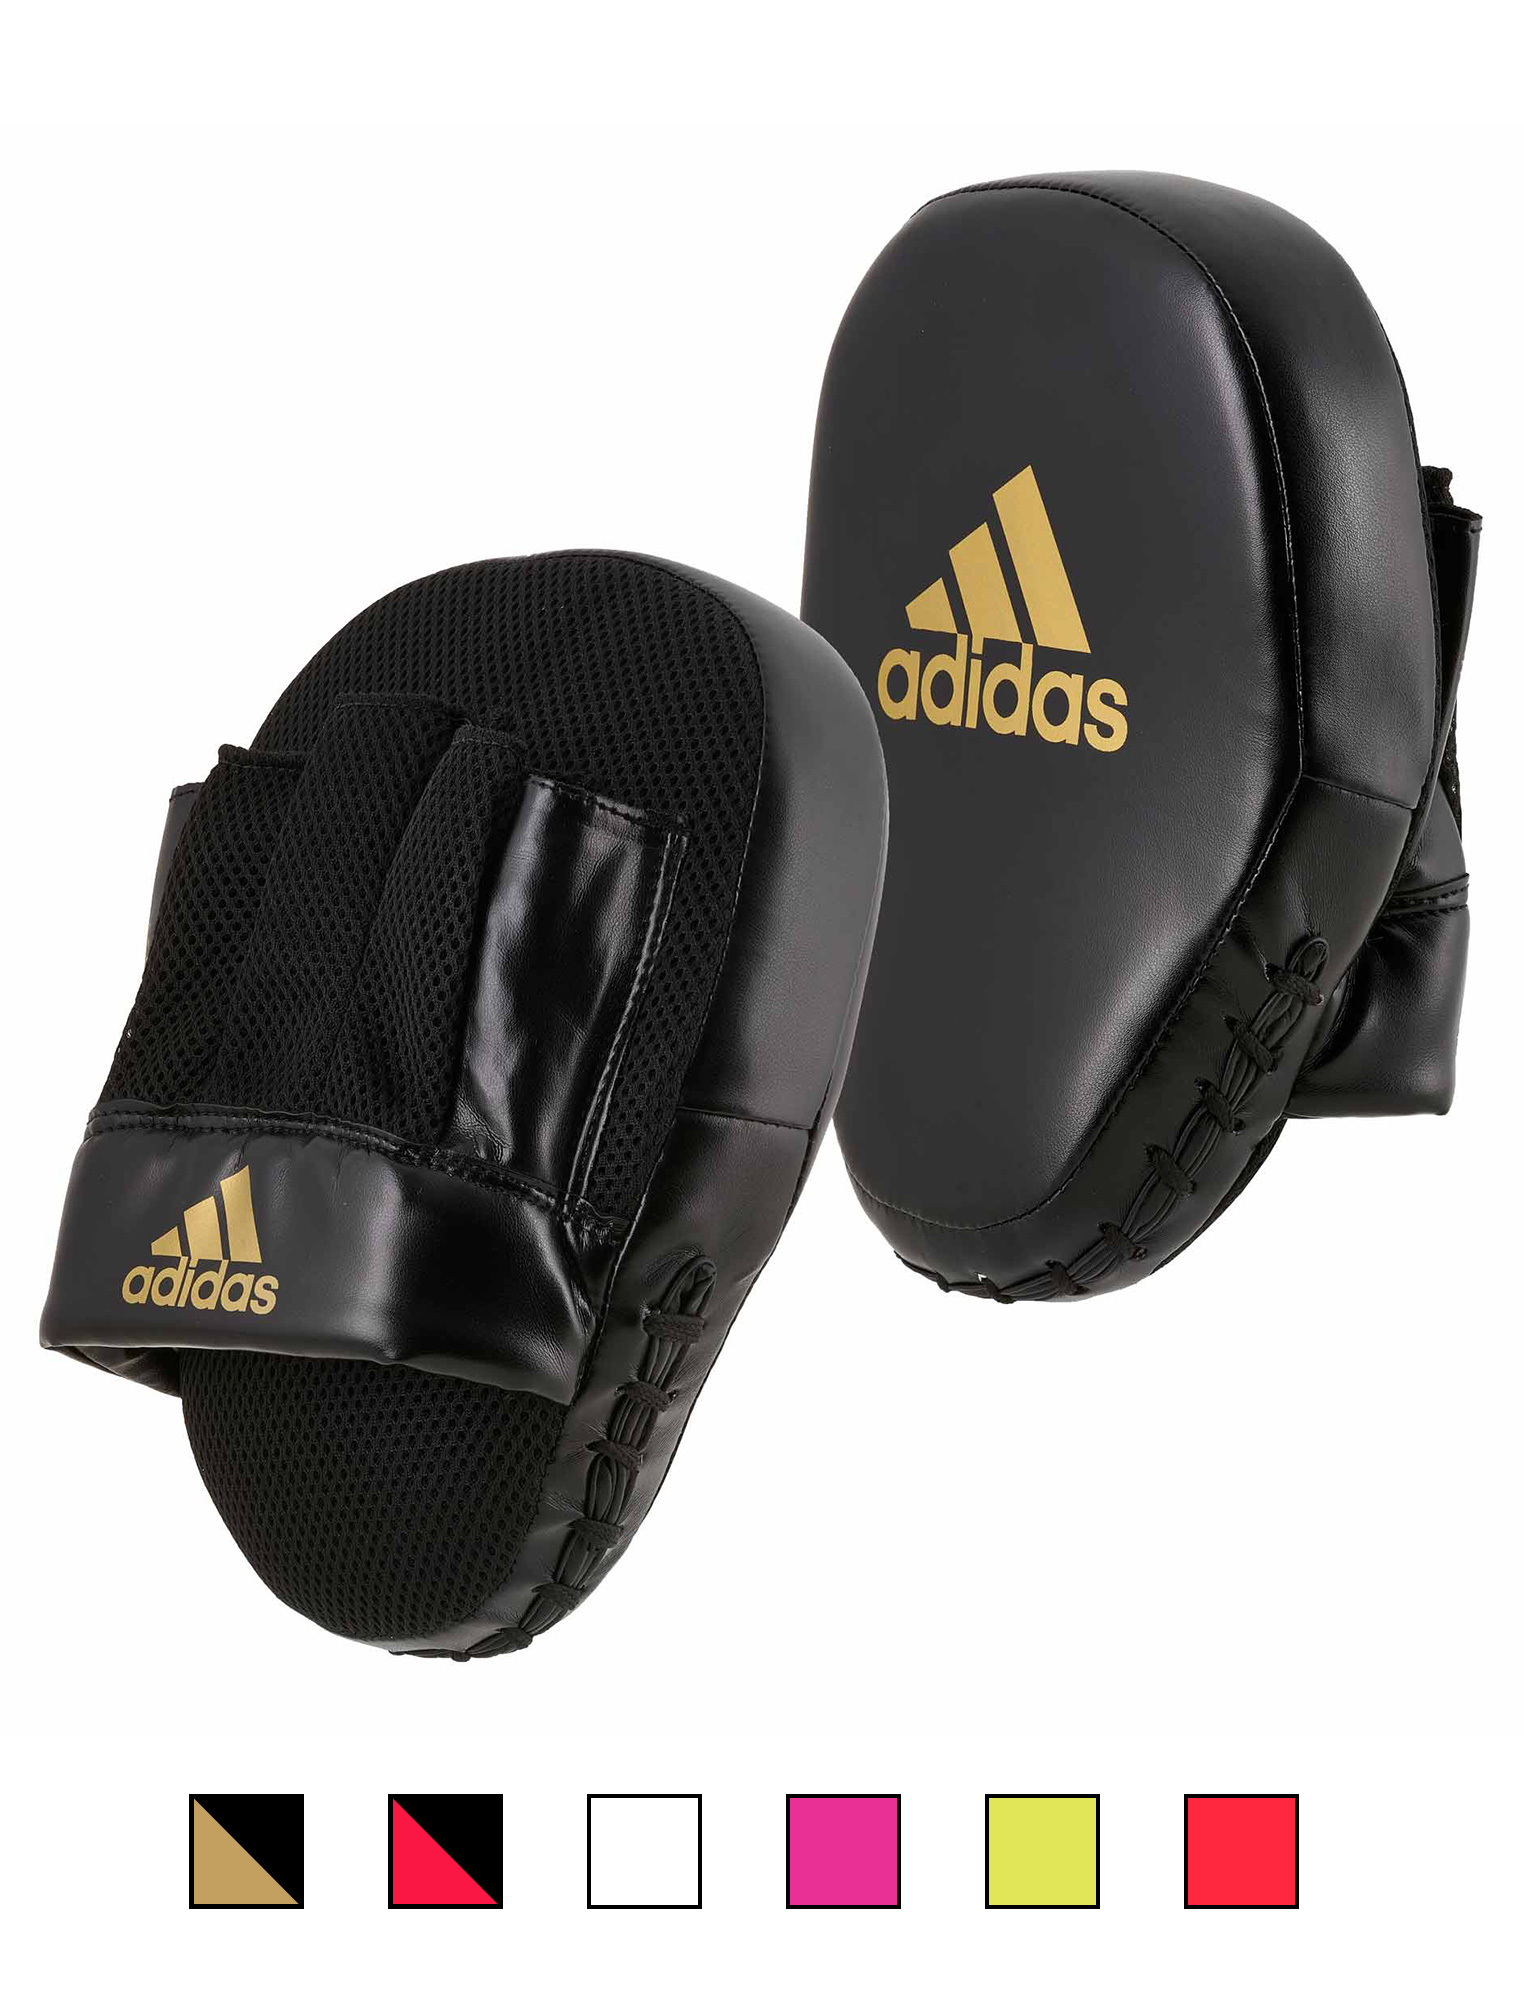 adidas speed Coach focus mitt ADISBAC014 black/gold